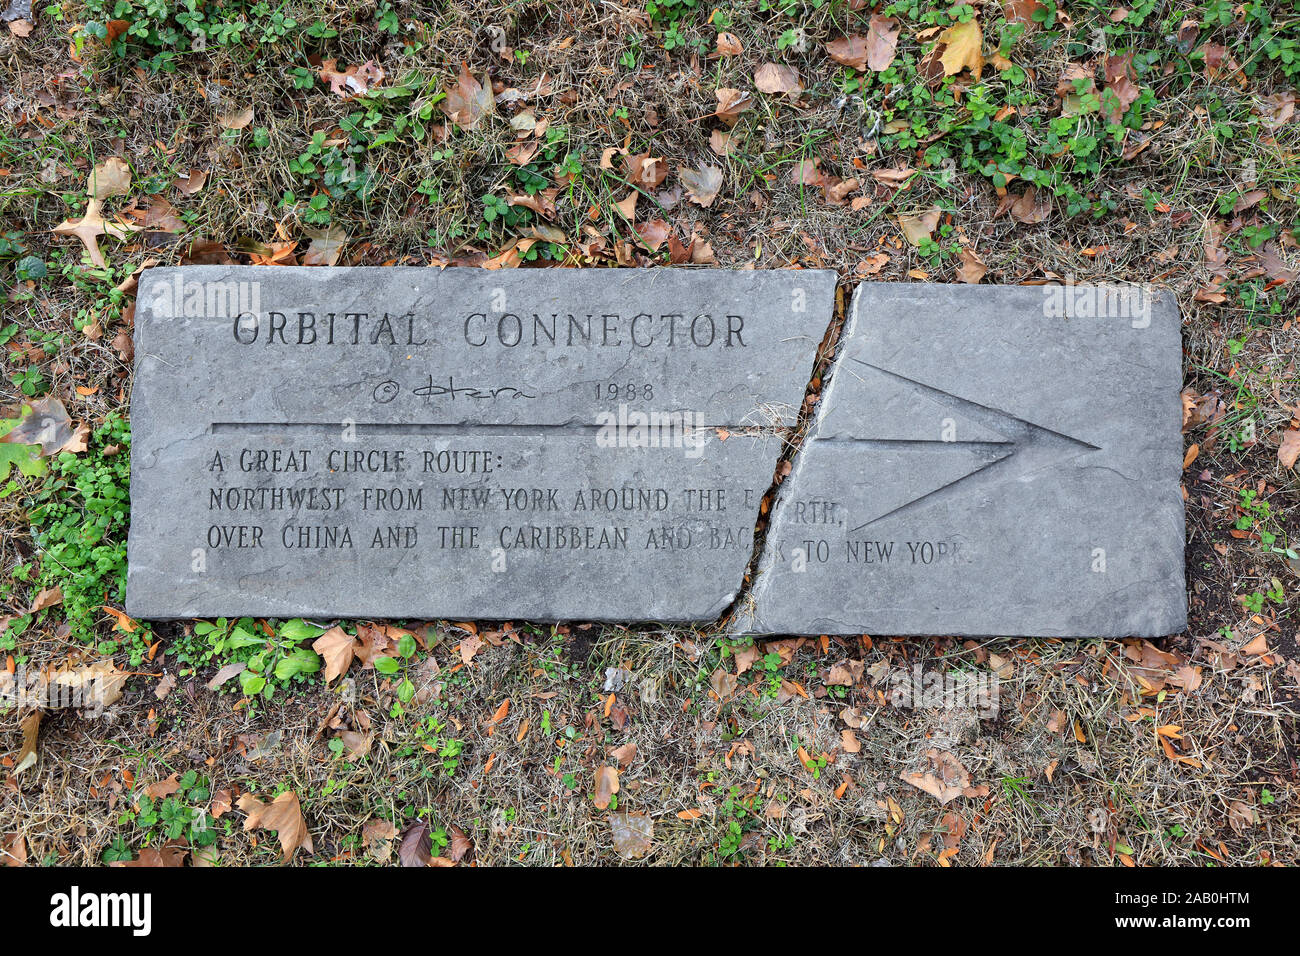 A stone marker describing the Orbital Connector sculpture by Hera Stock Photo